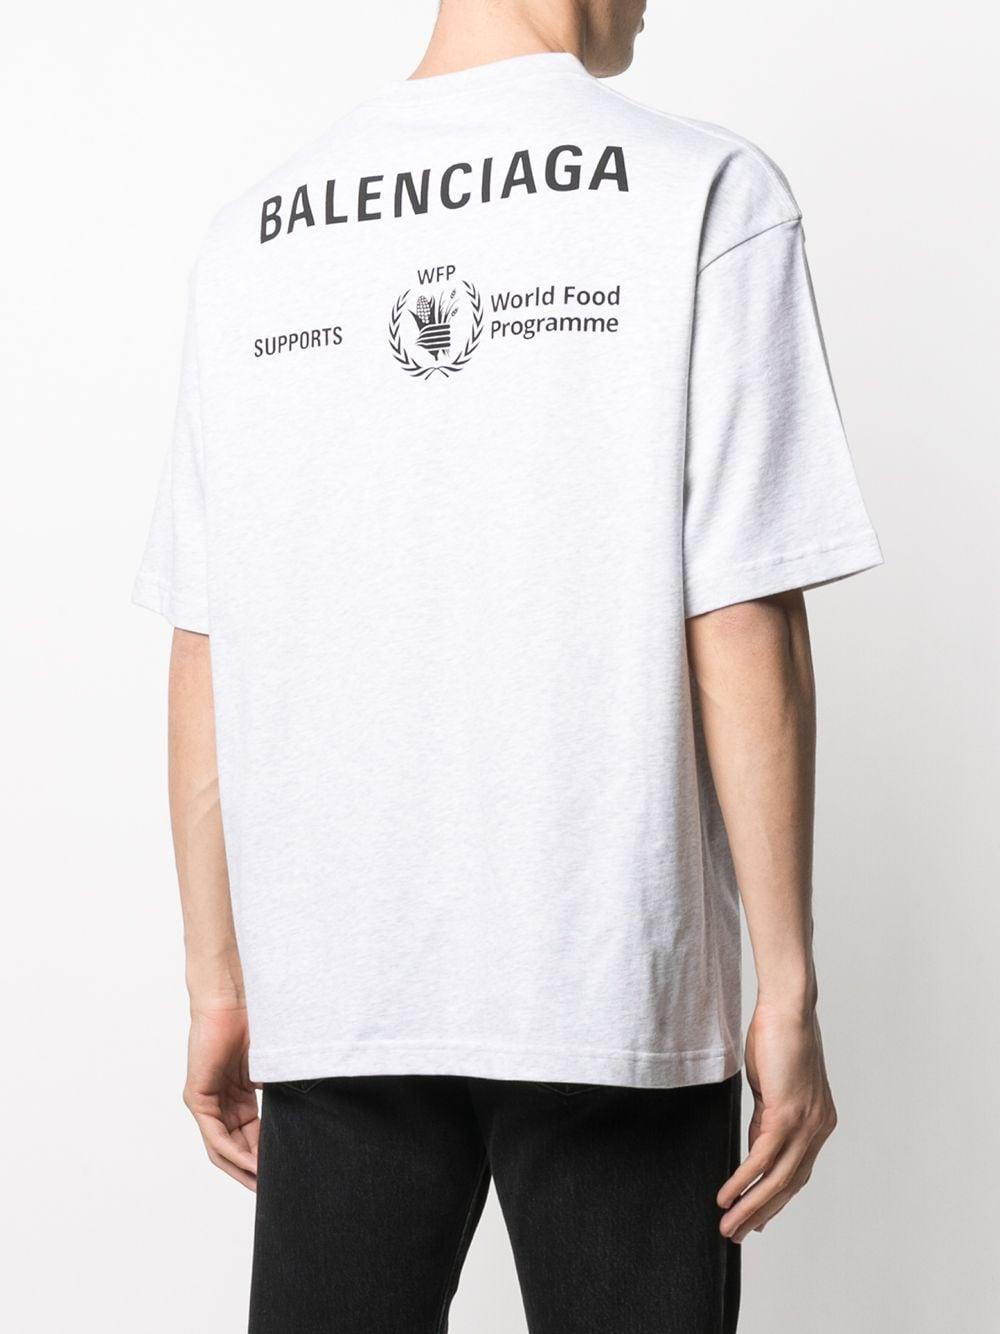 Balenciaga Cotton Wfp Printed T-shirt in Grey (Gray) for Men - Lyst